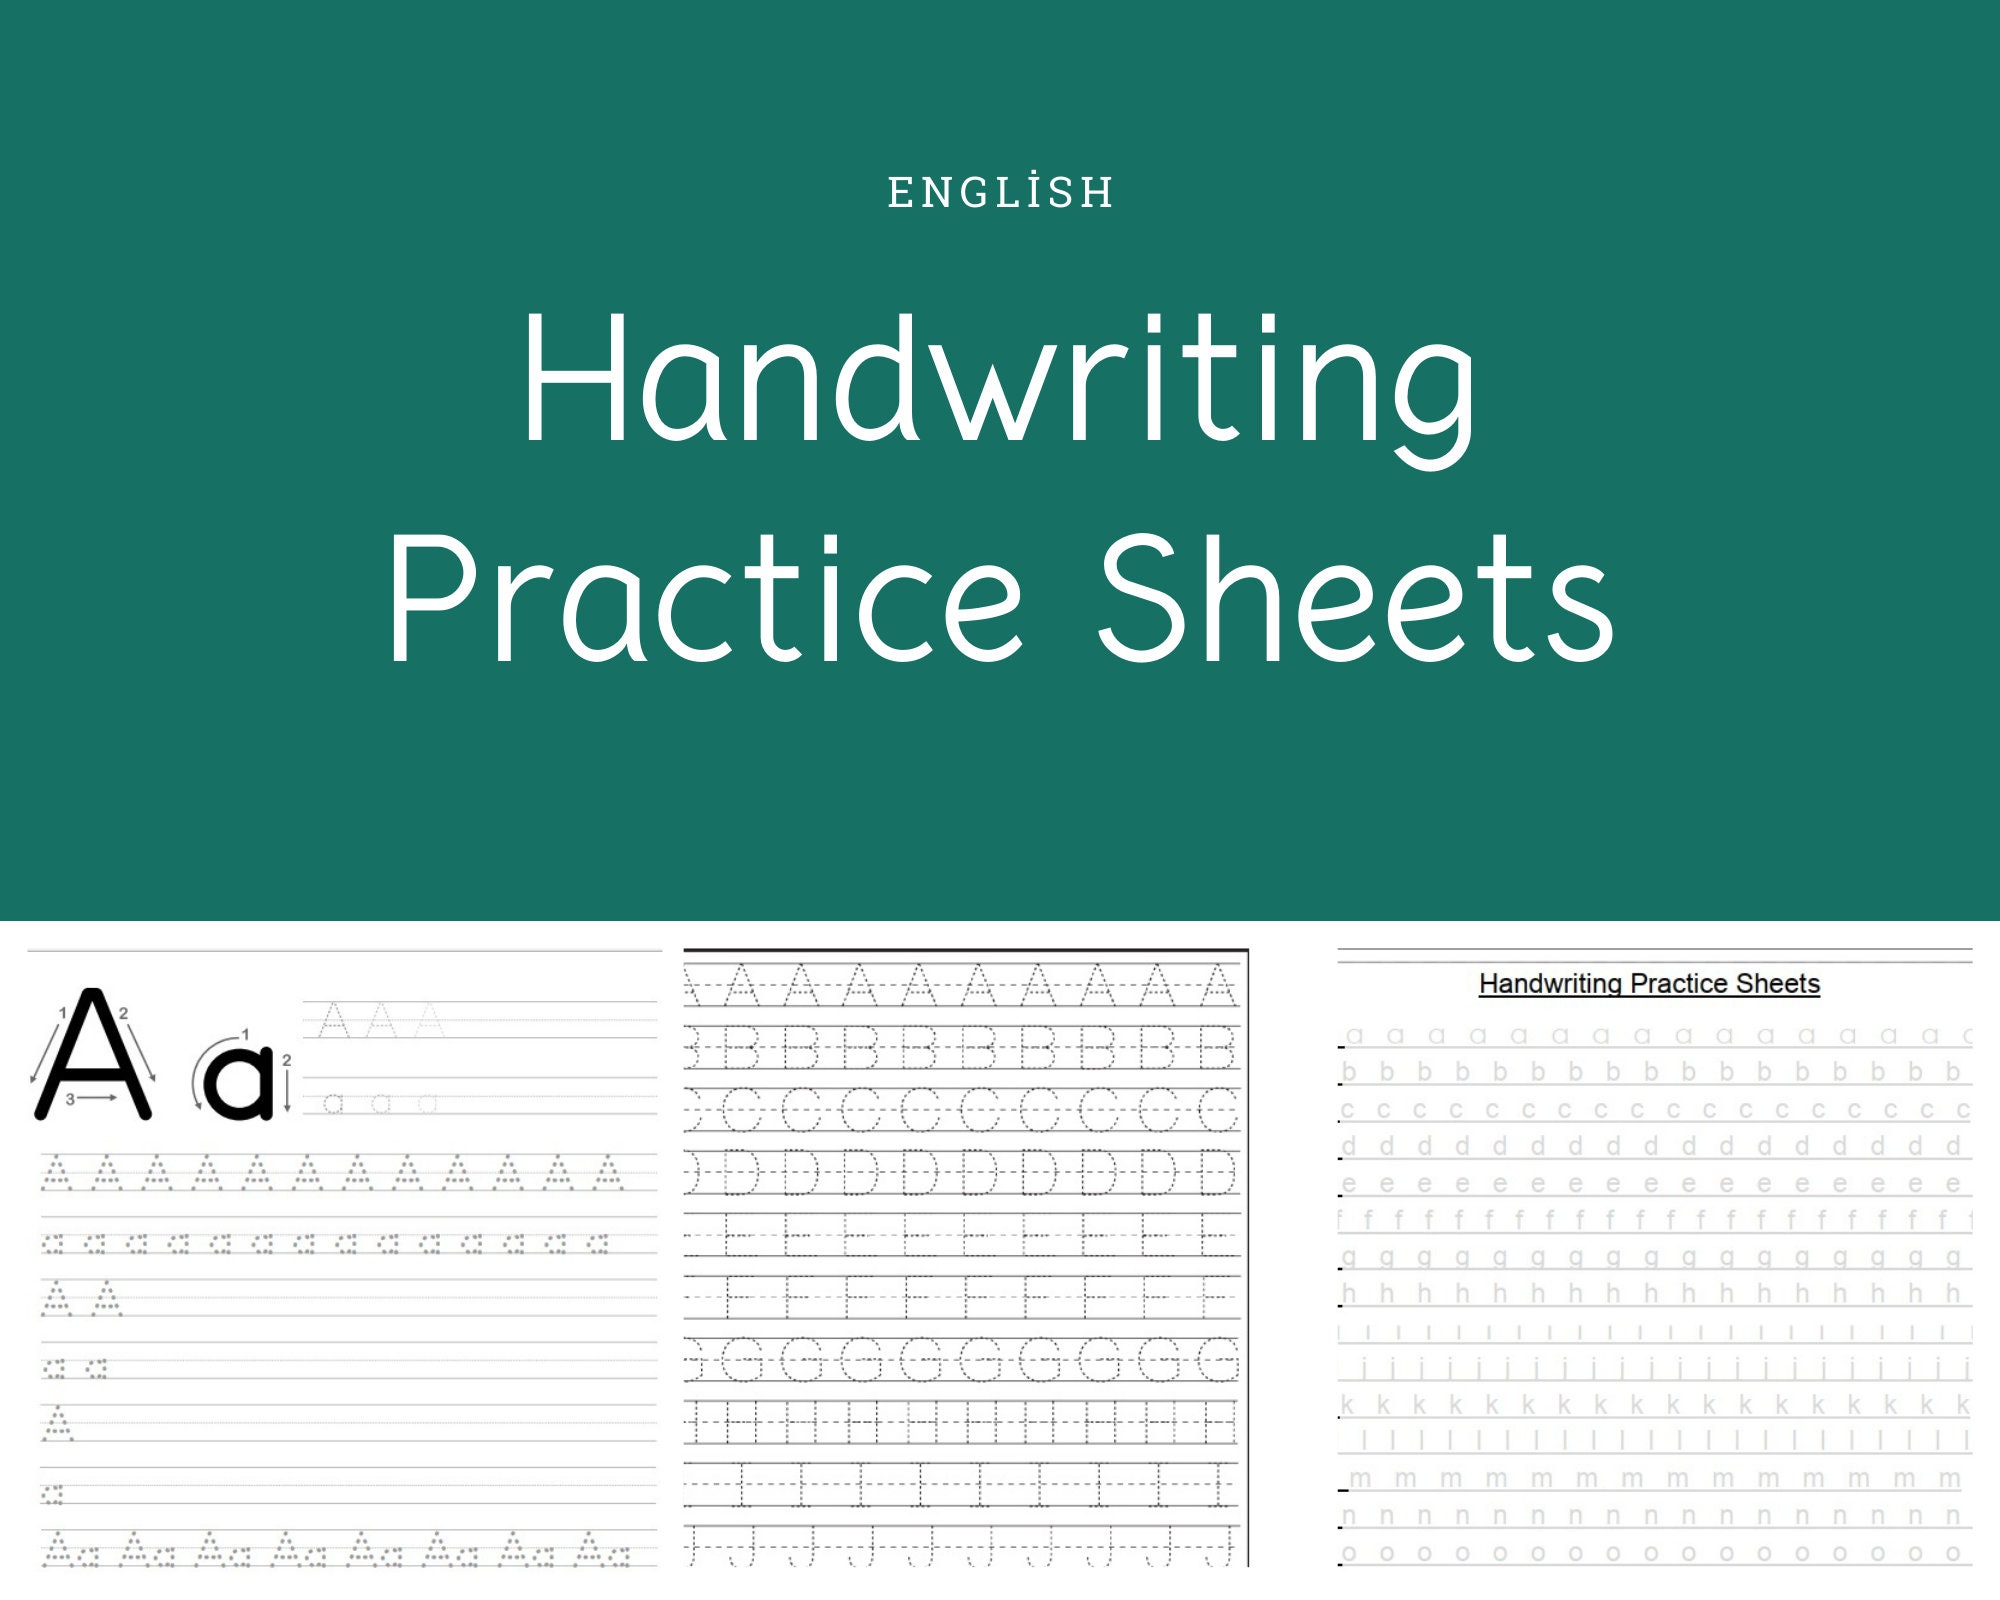 handwriting-practice-sheets-handwriting-worksheets-etsy